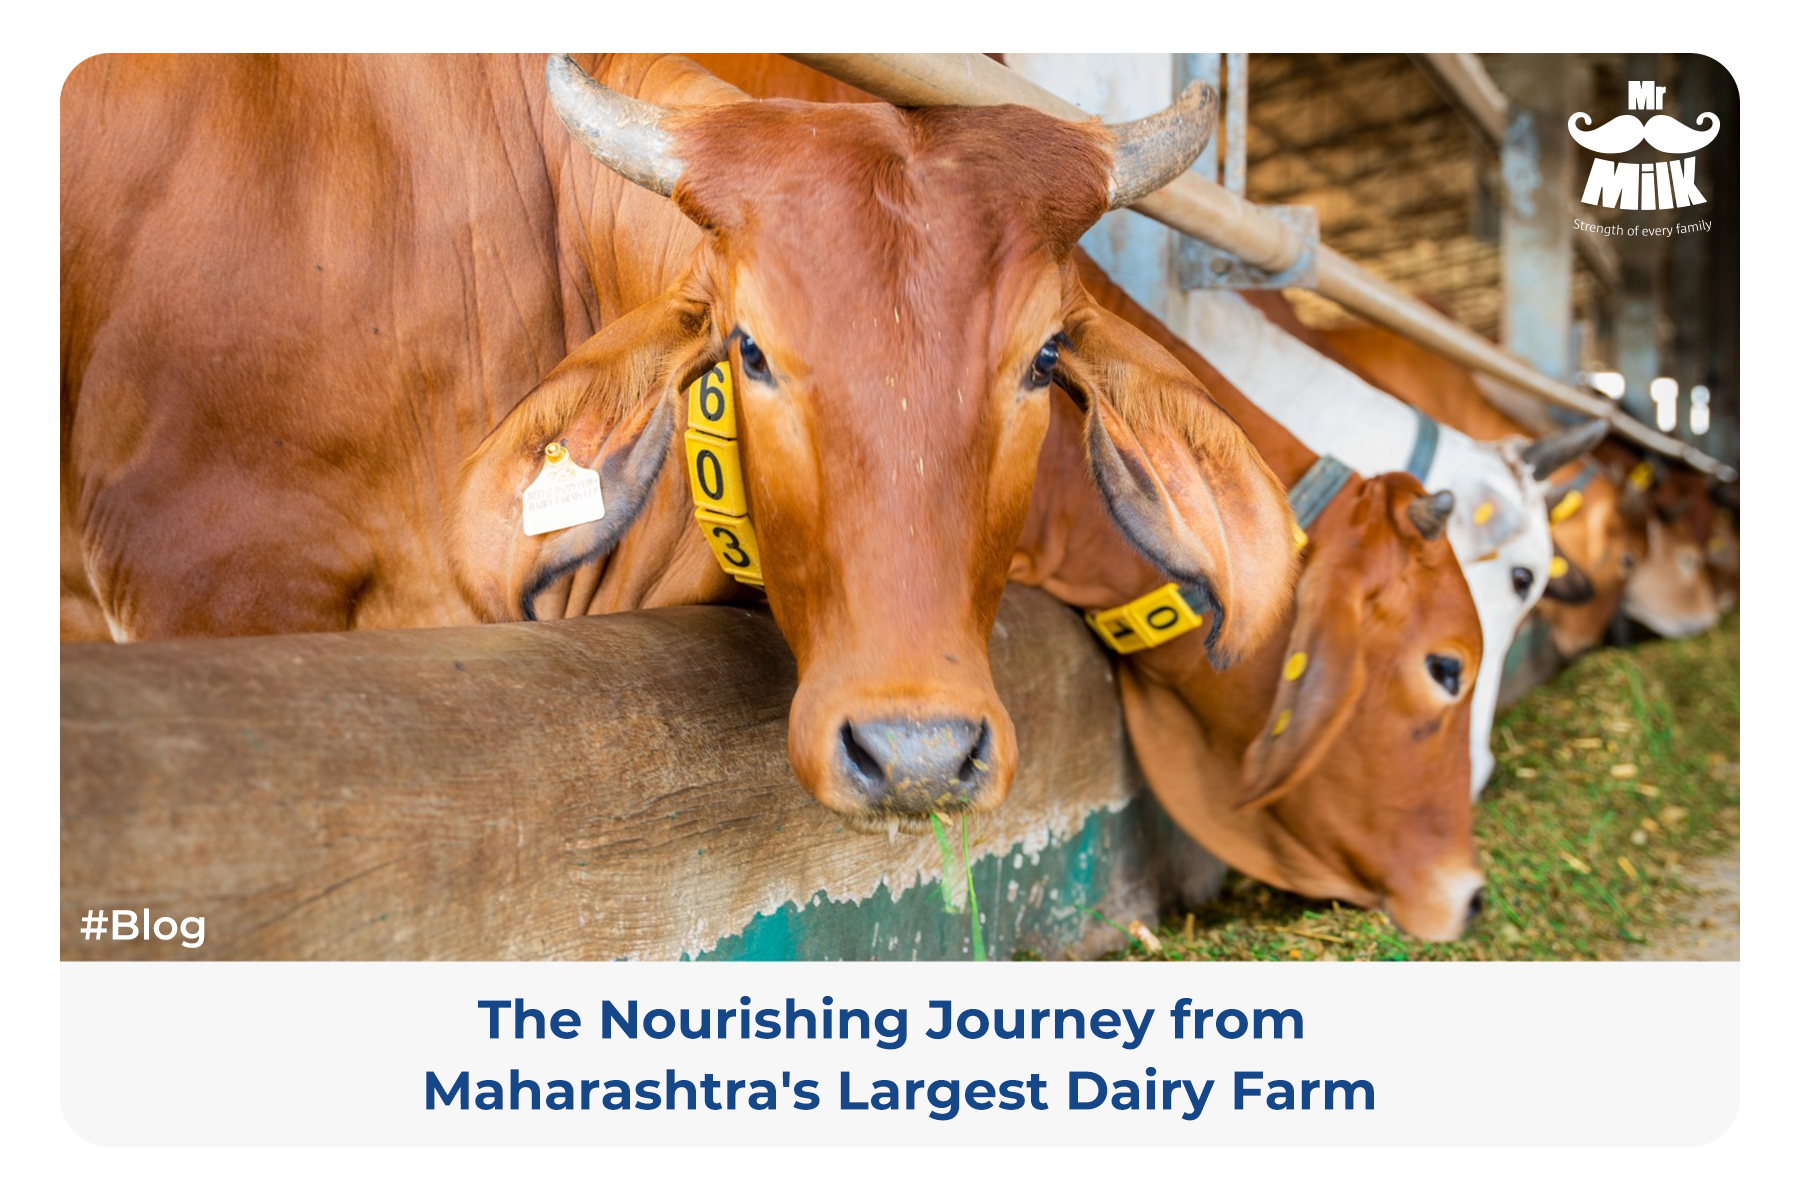 Mr Milk – The Nourishing Journey from Maharashtra’s Largest Dairy Farm.